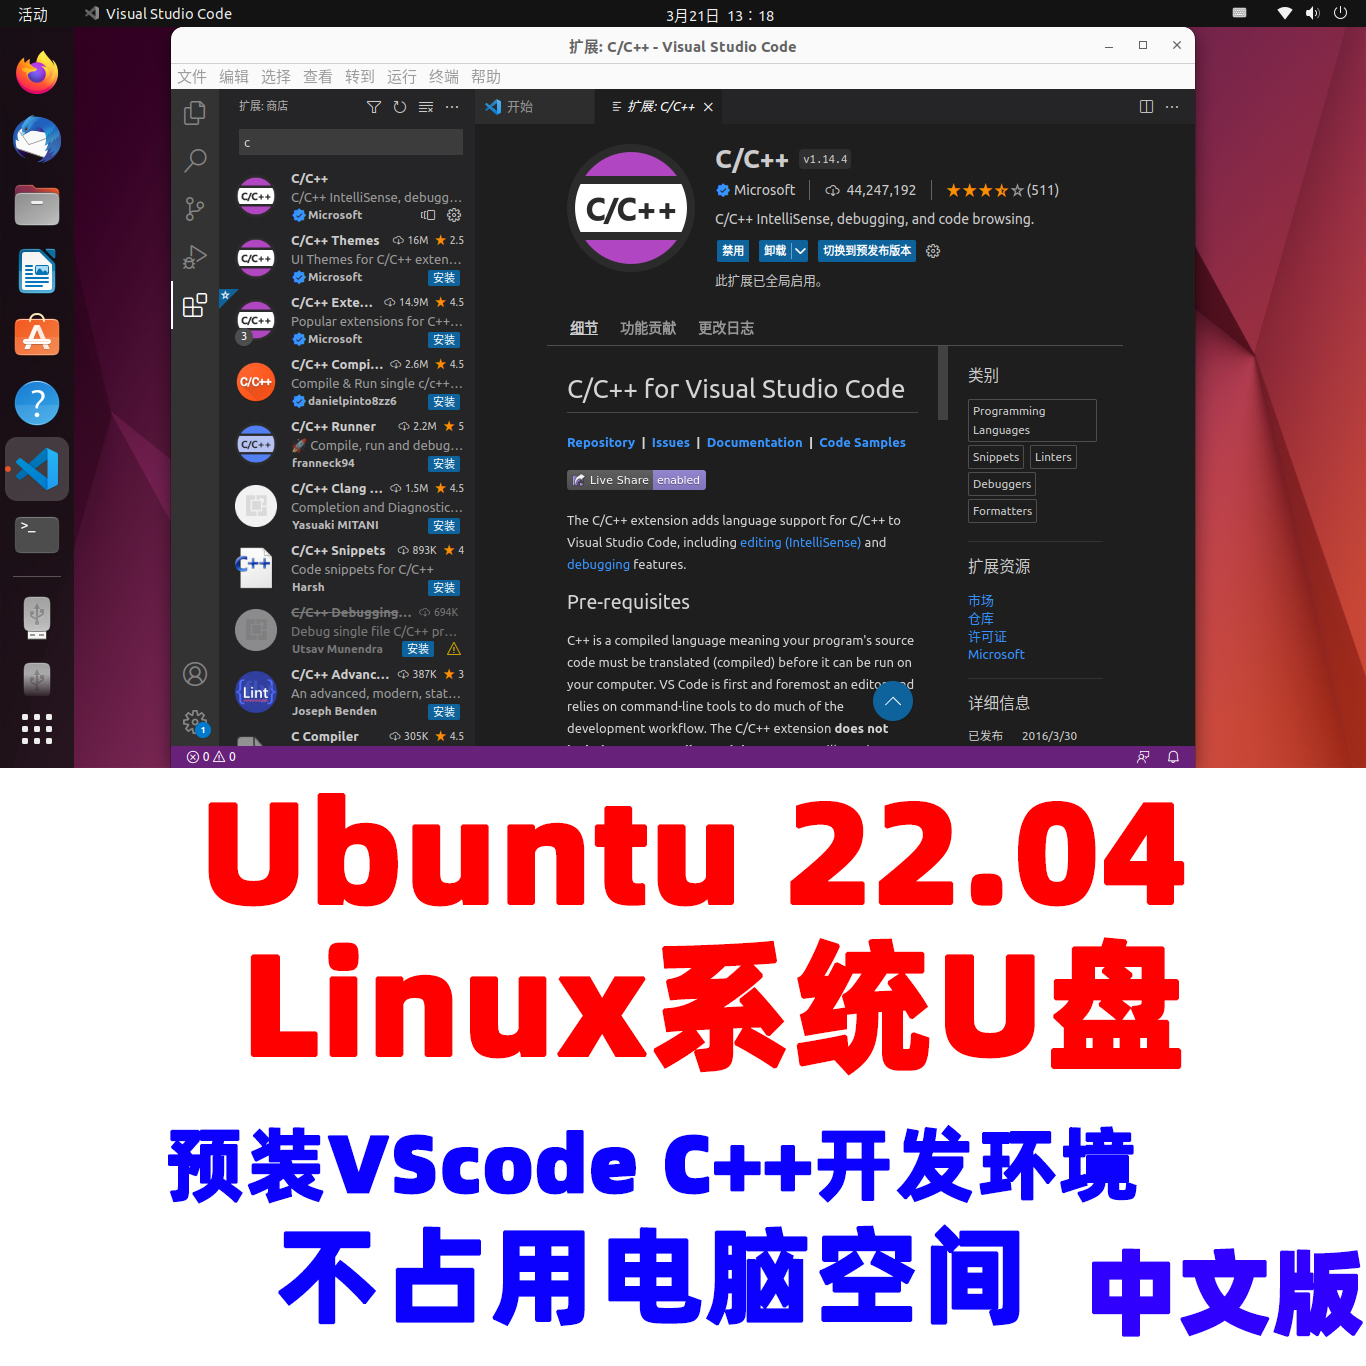 linux系统U盘ubuntu22.04安装vscode中文c++开发环境 linux to go